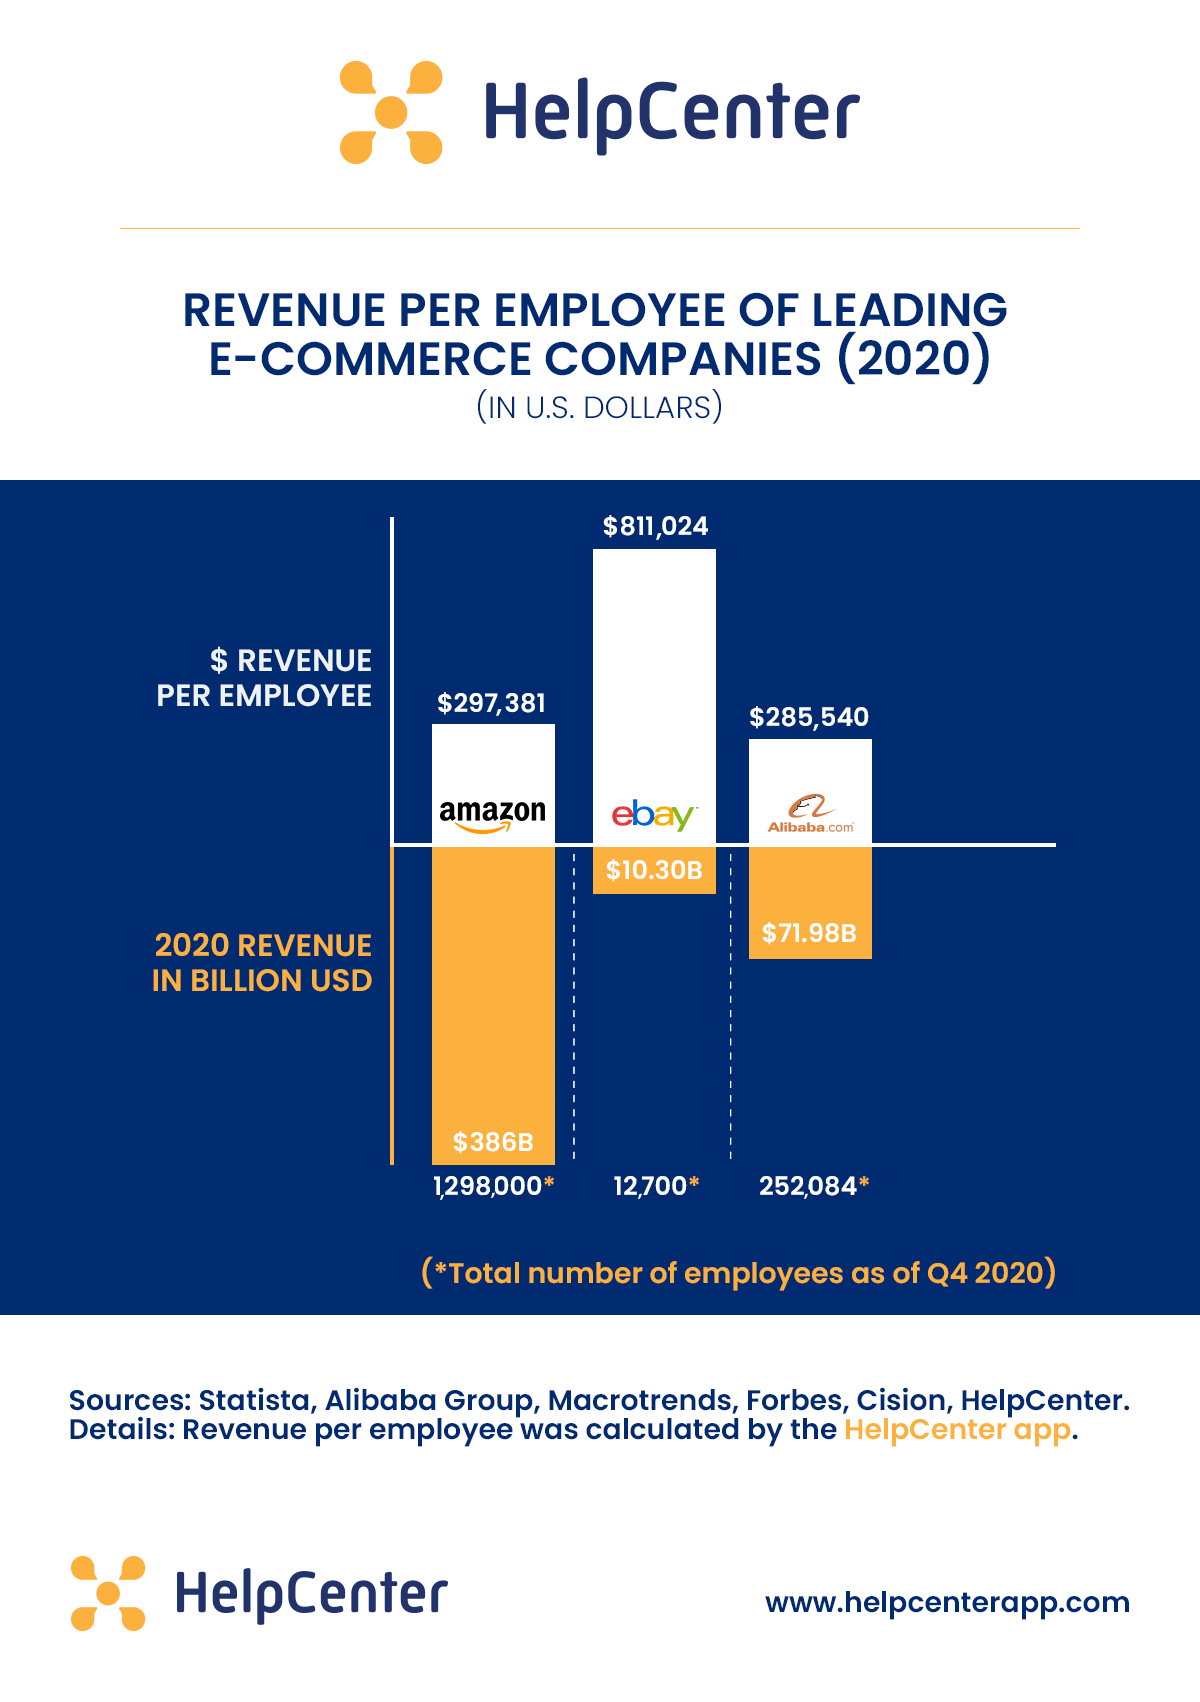 Revenue per employee of top e-commerce companies - Amazon, eBay, Alibaba